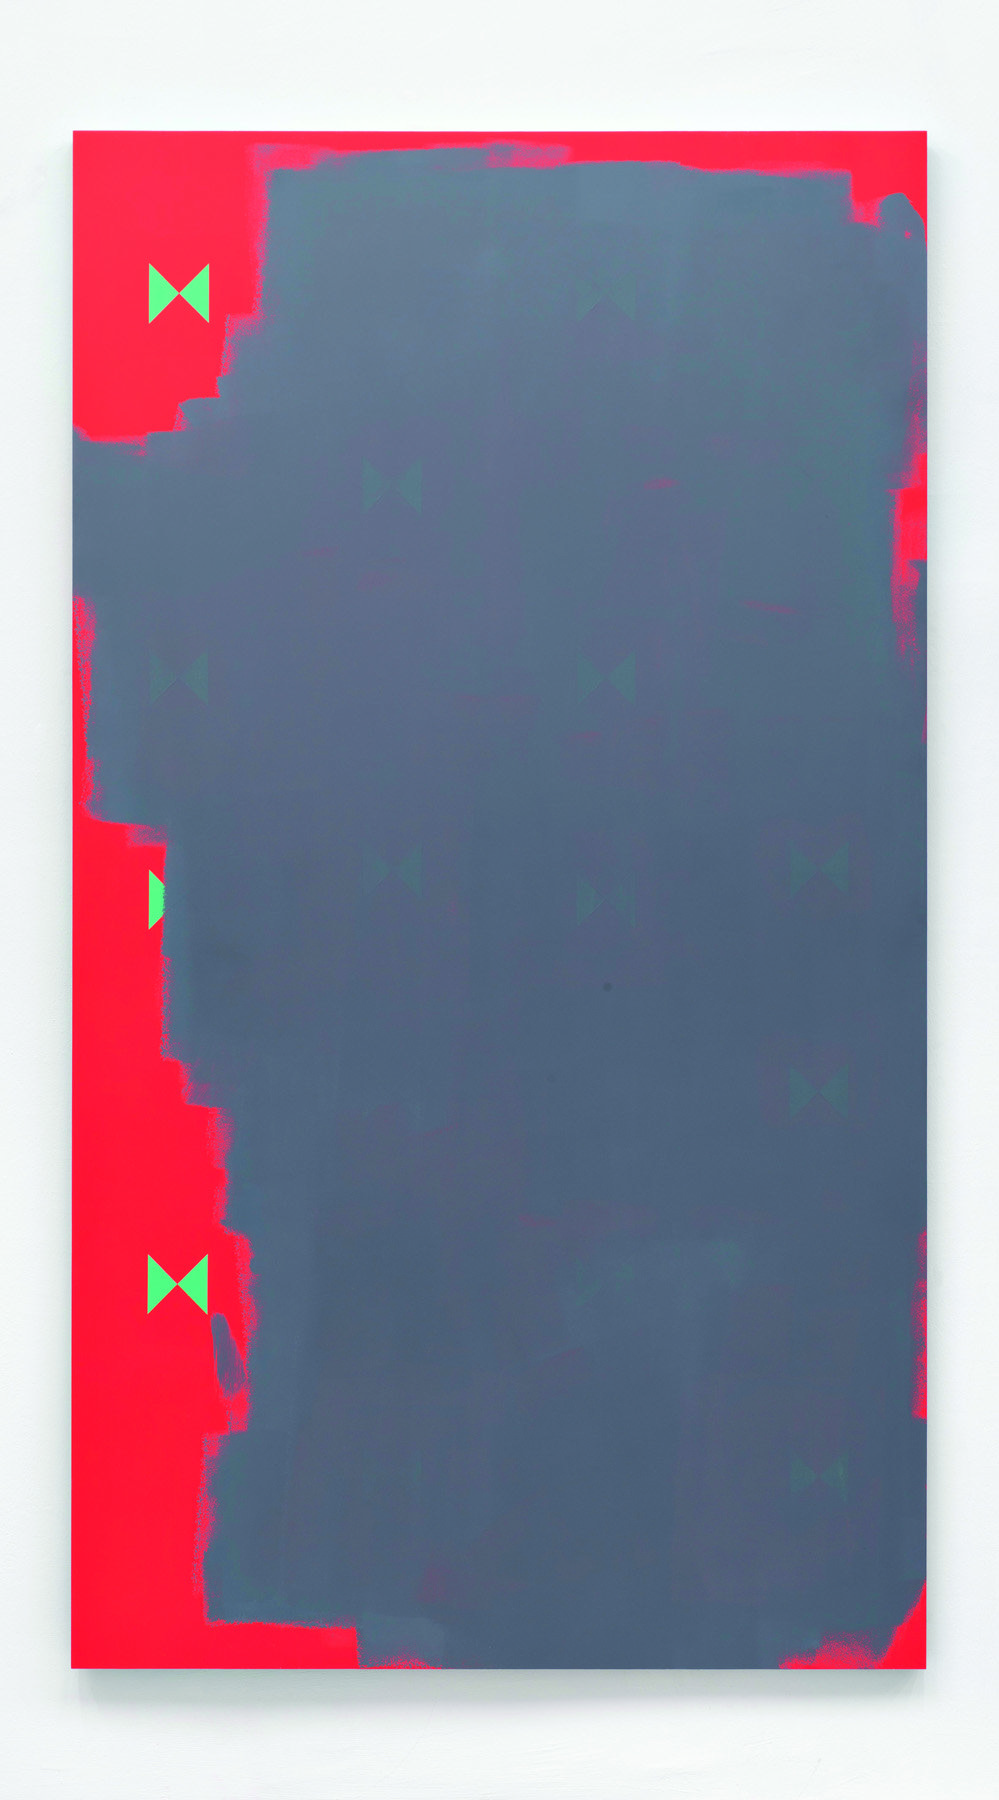 Nick OberthalerUntitled, 2015Acrylic on aluminium180 x 100 cm